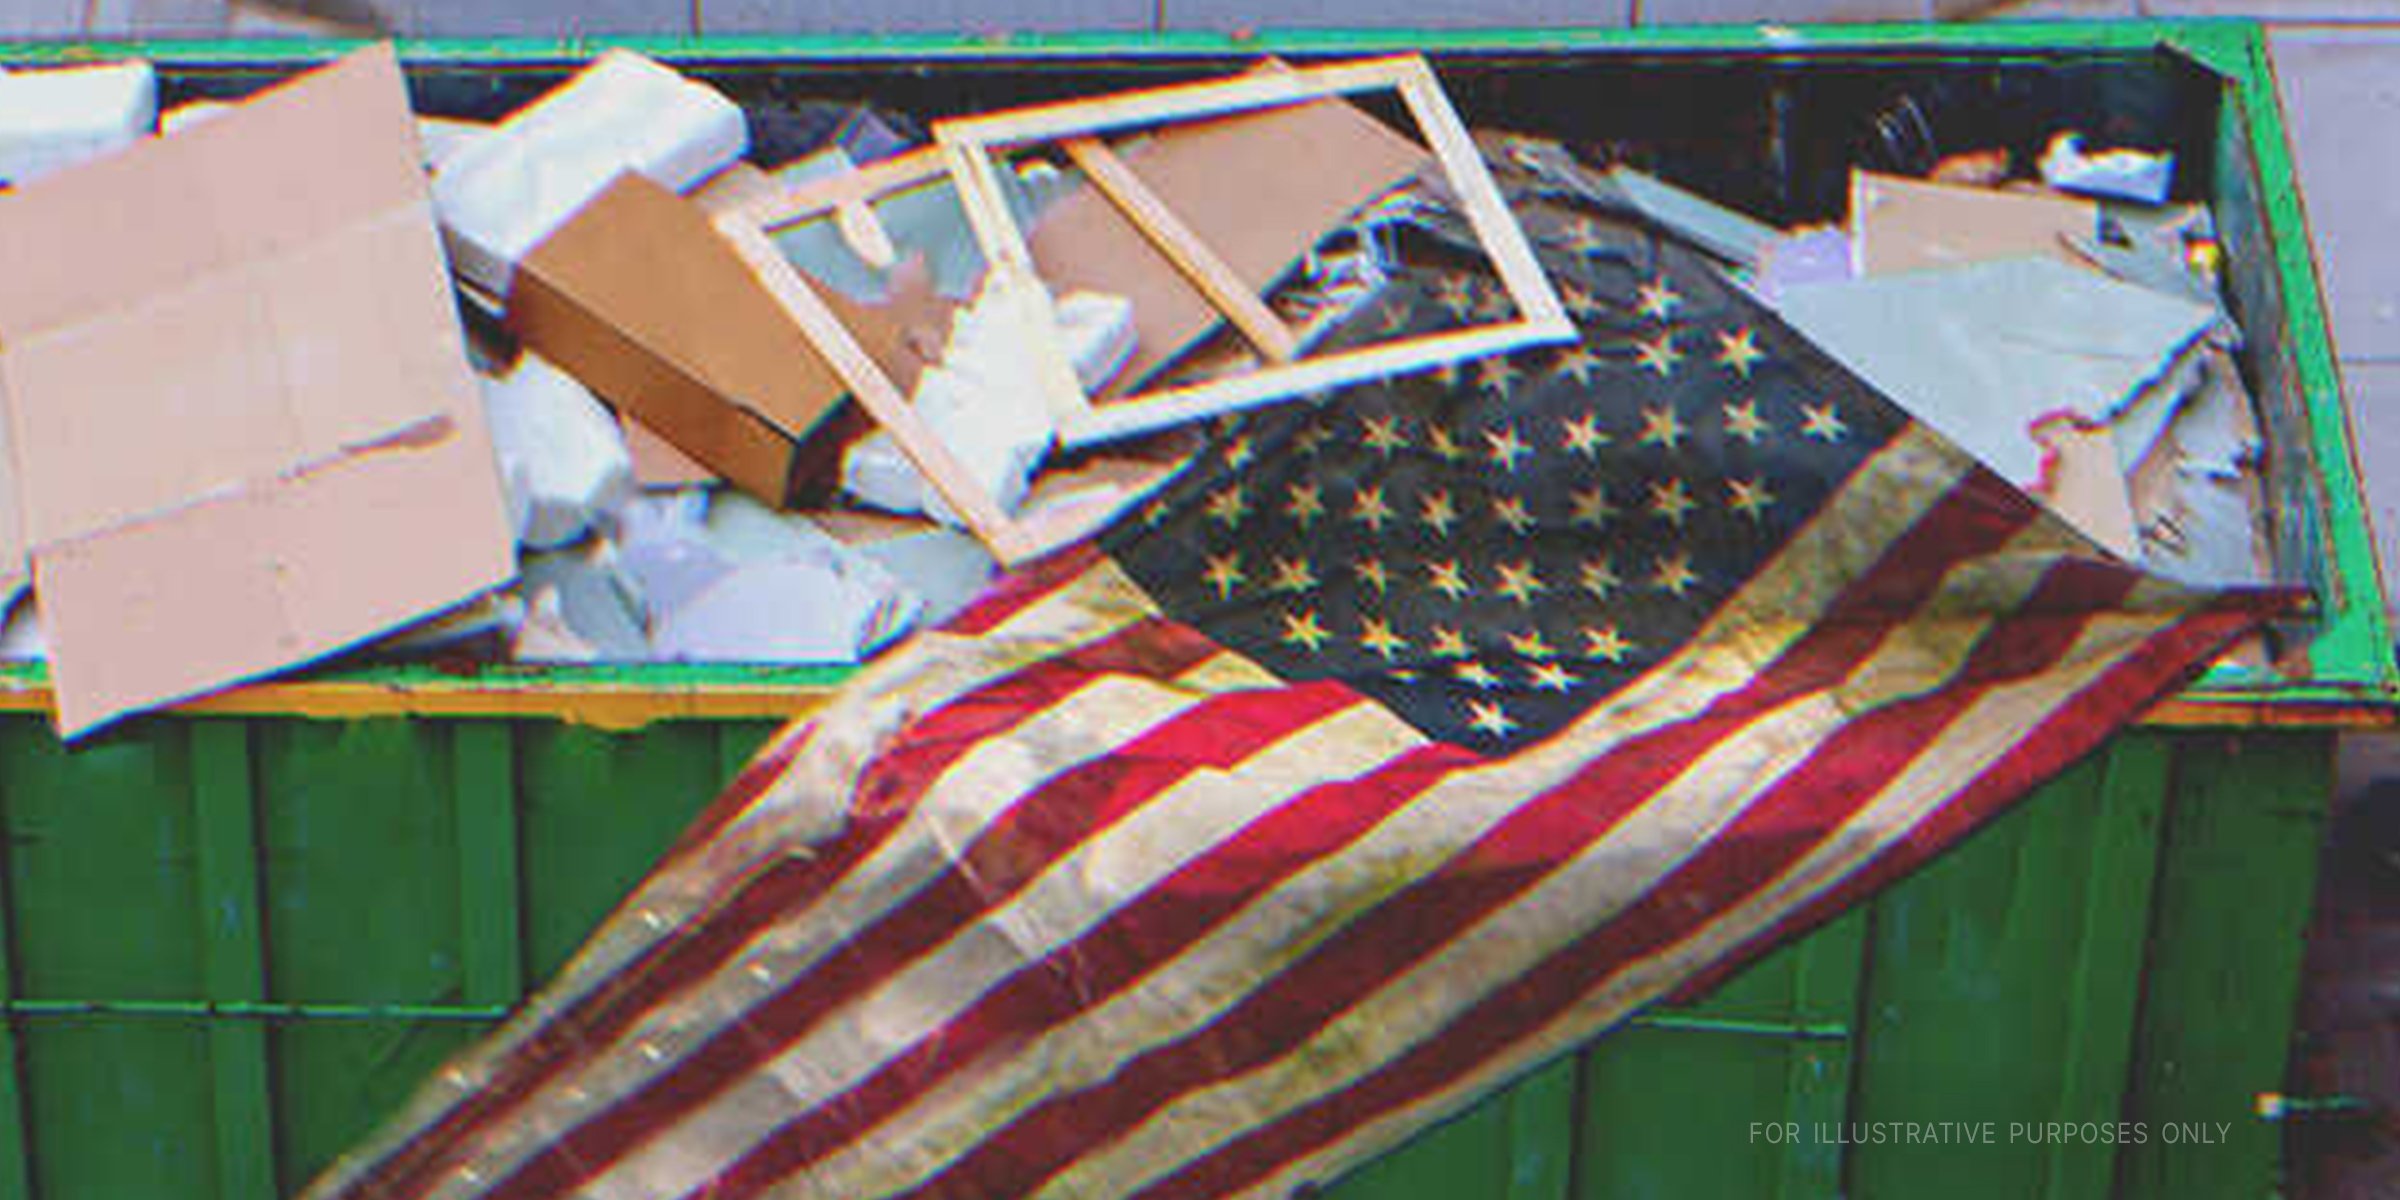 A flag in a dumpster | Source: Shutterstock